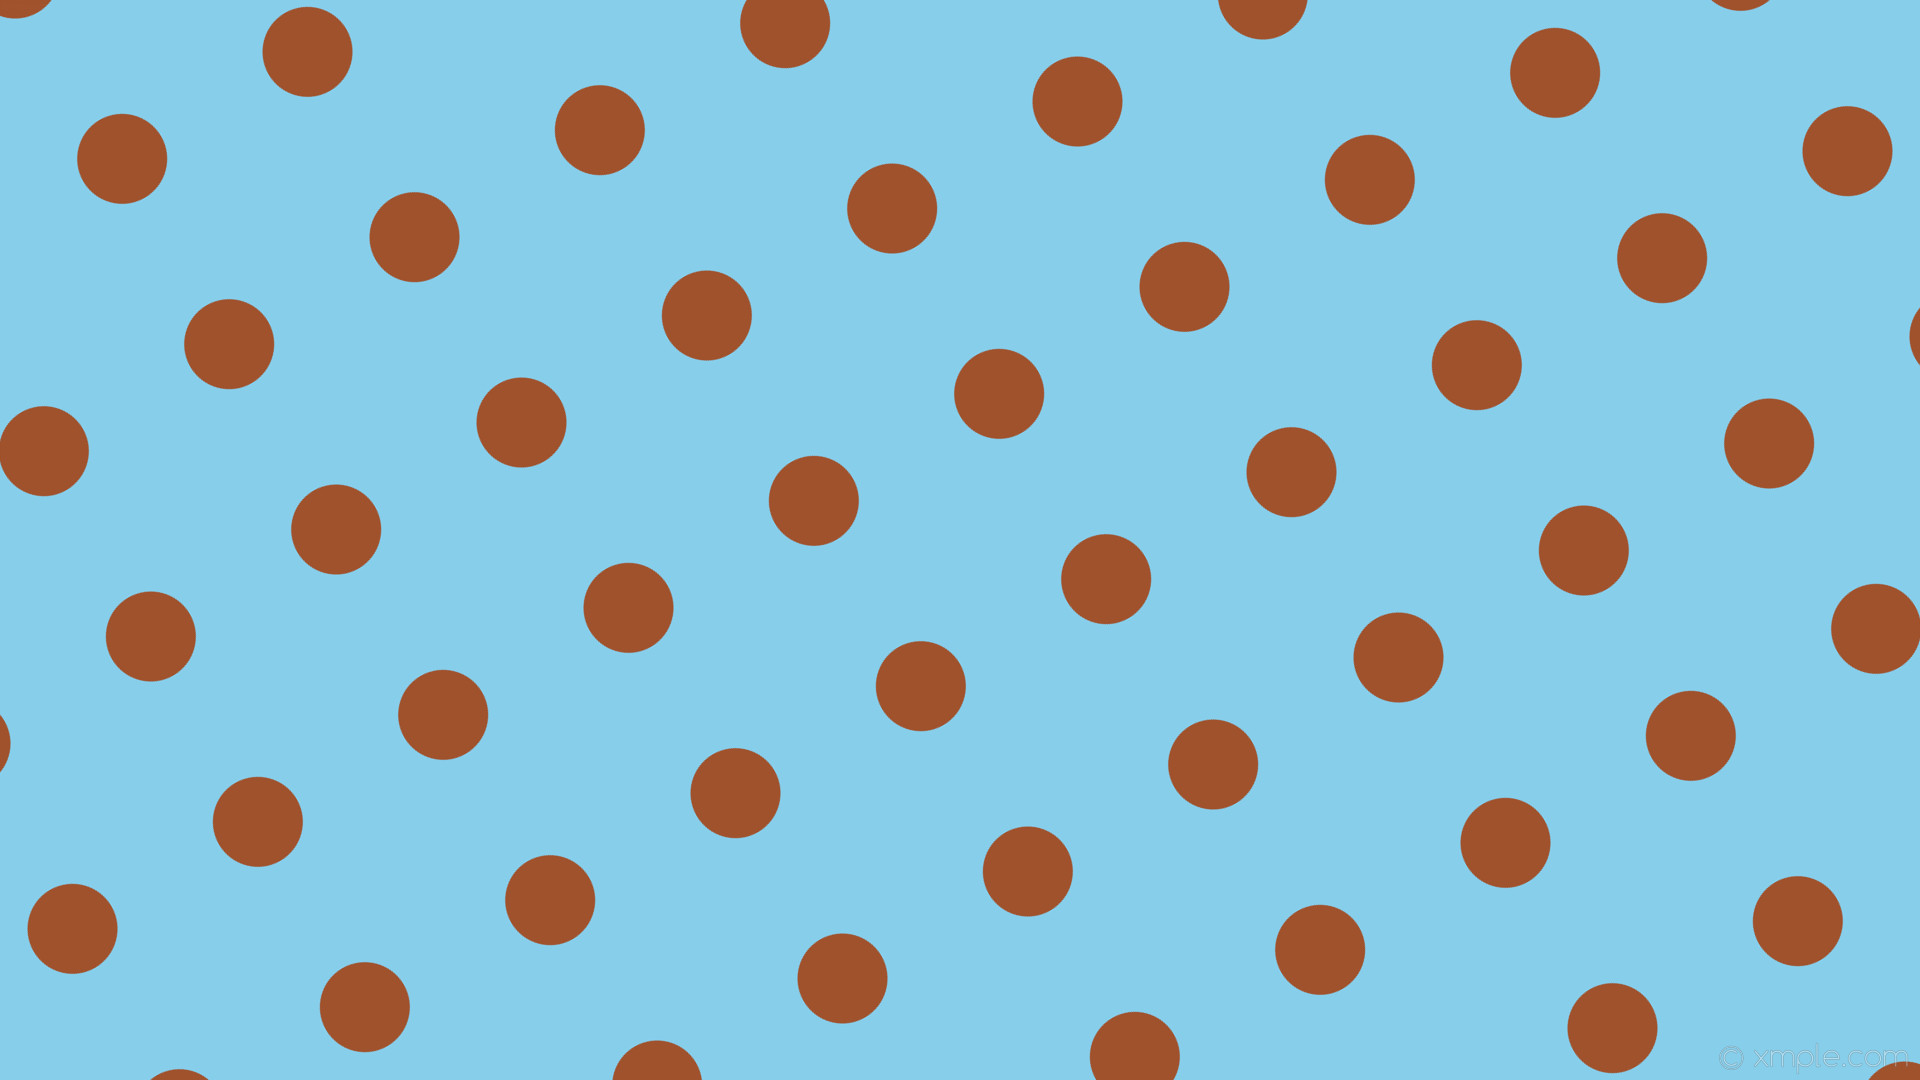 1920x1080 wallpaper spots brown dots blue polka sky blue sienna #87ceeb #a0522d 210Â°  90px